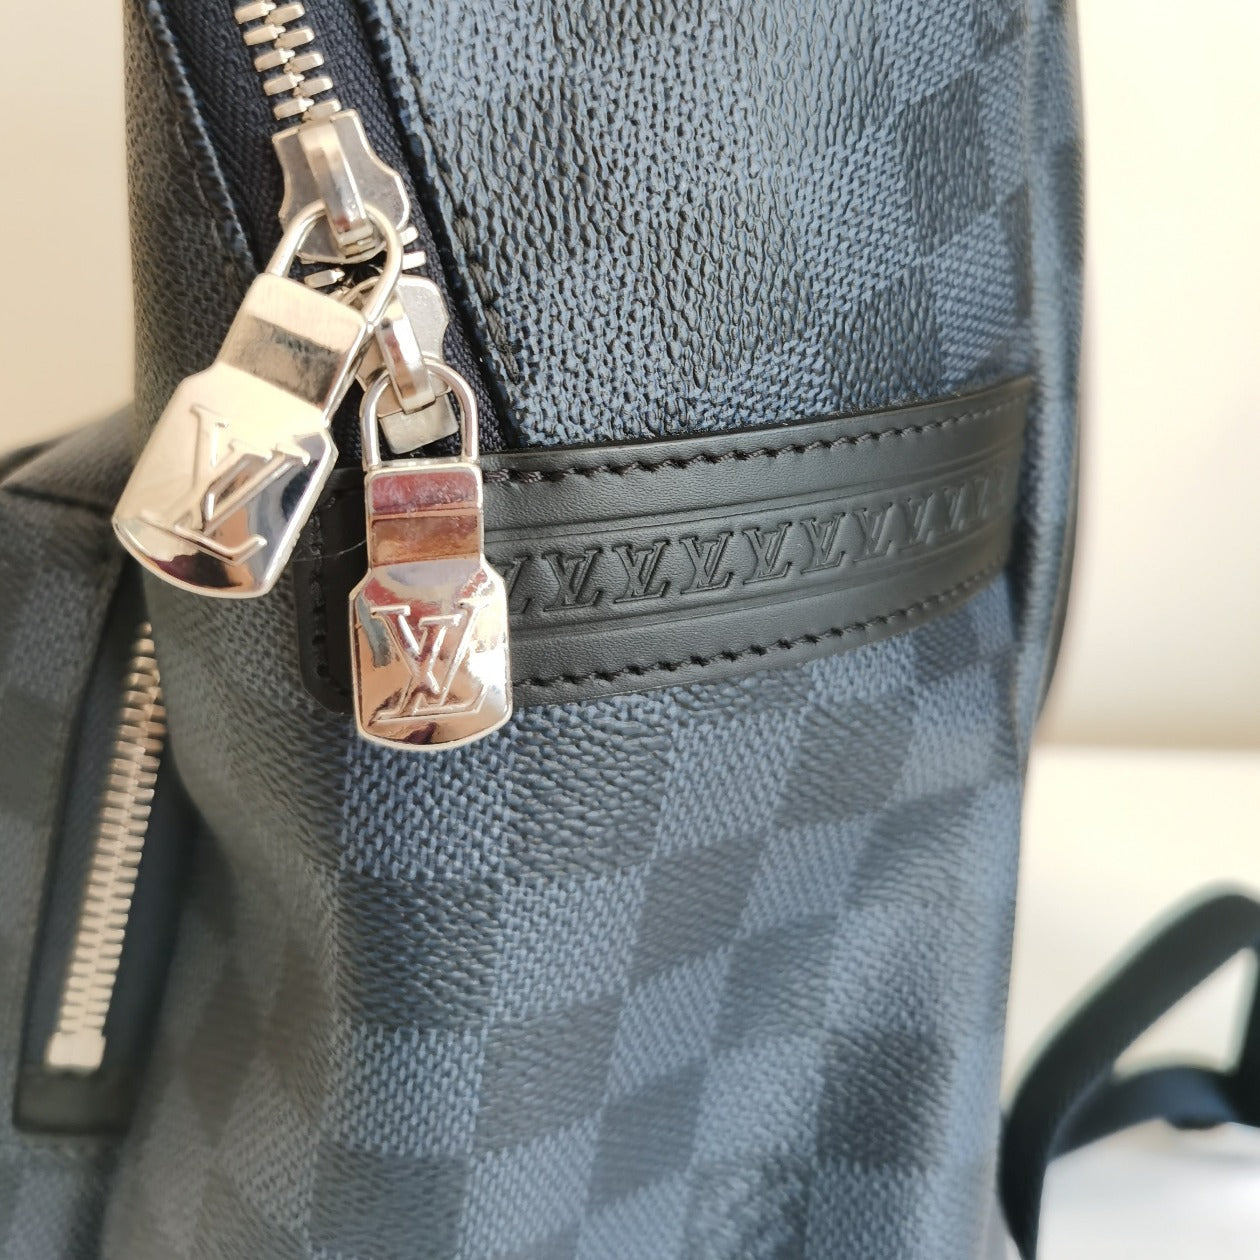 Louis Vuitton Apollo Backpack Limited Edition Damier Cobalt Jungle